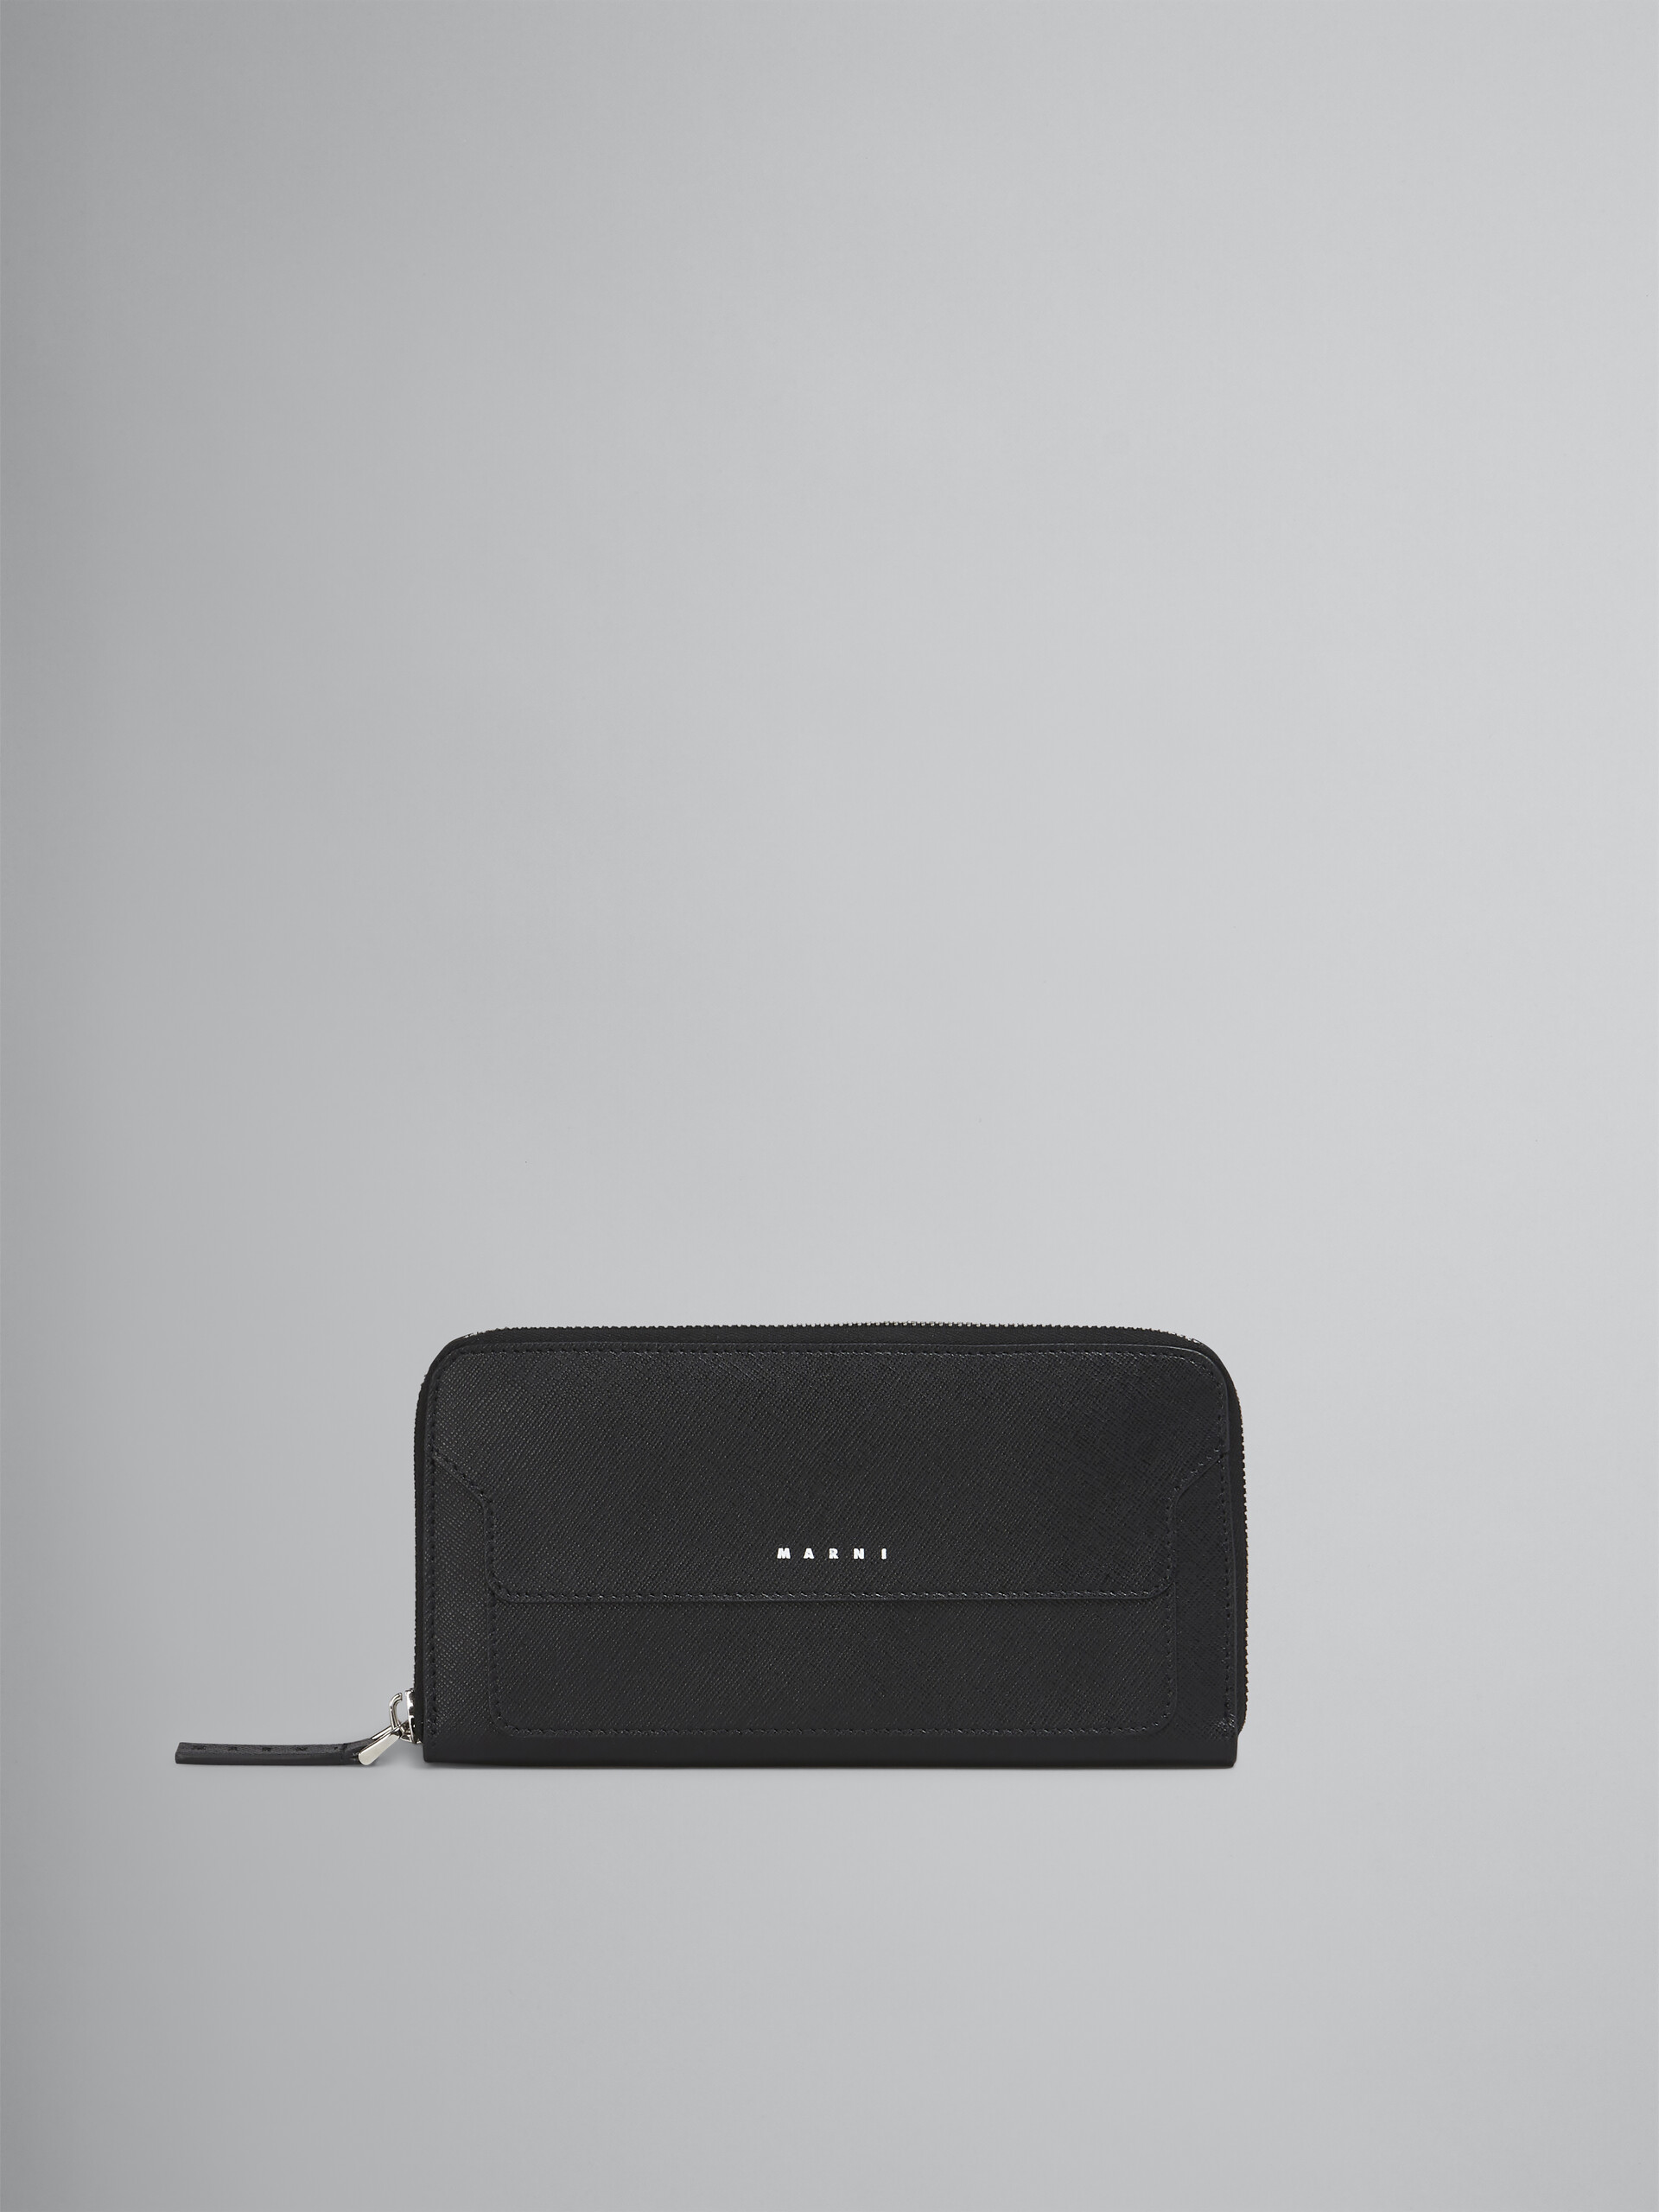 Black saffiano leather zip-around wallet - Wallets - Image 1